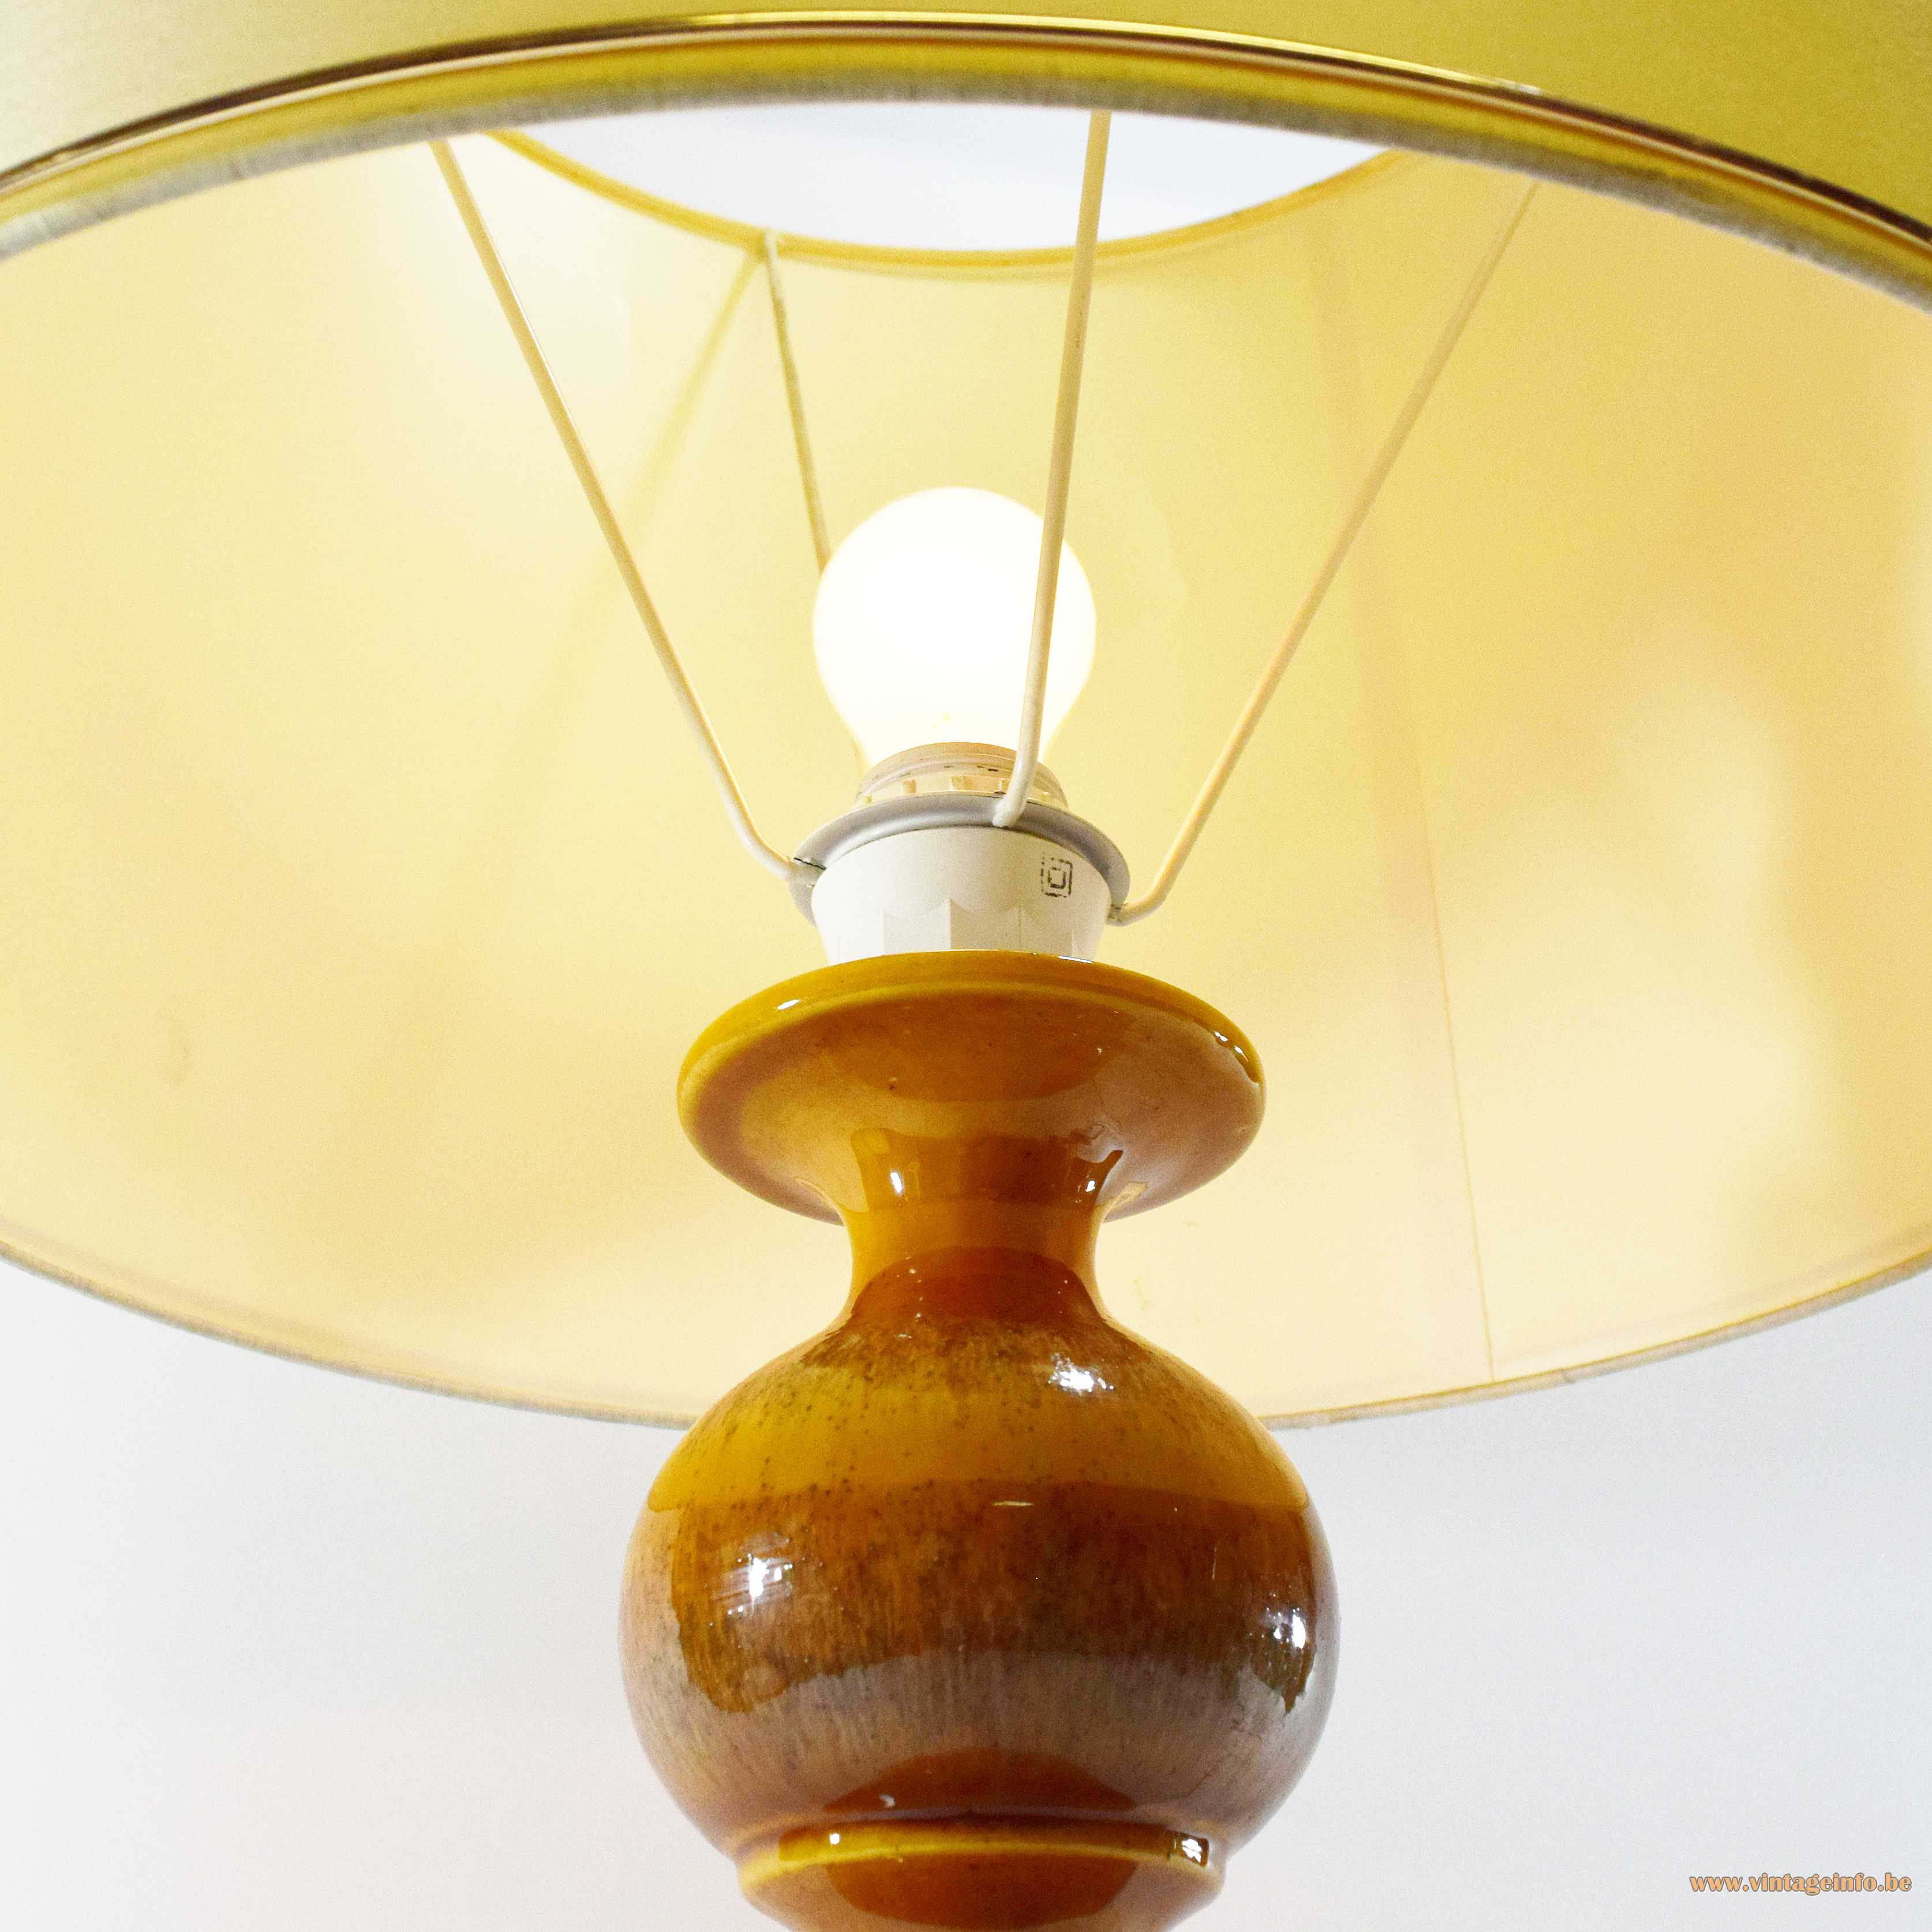 Kaiser Leuchten ceramic table lamp 3 ochre glazed globes conical fabric lampshade 1960s 1970s Germany